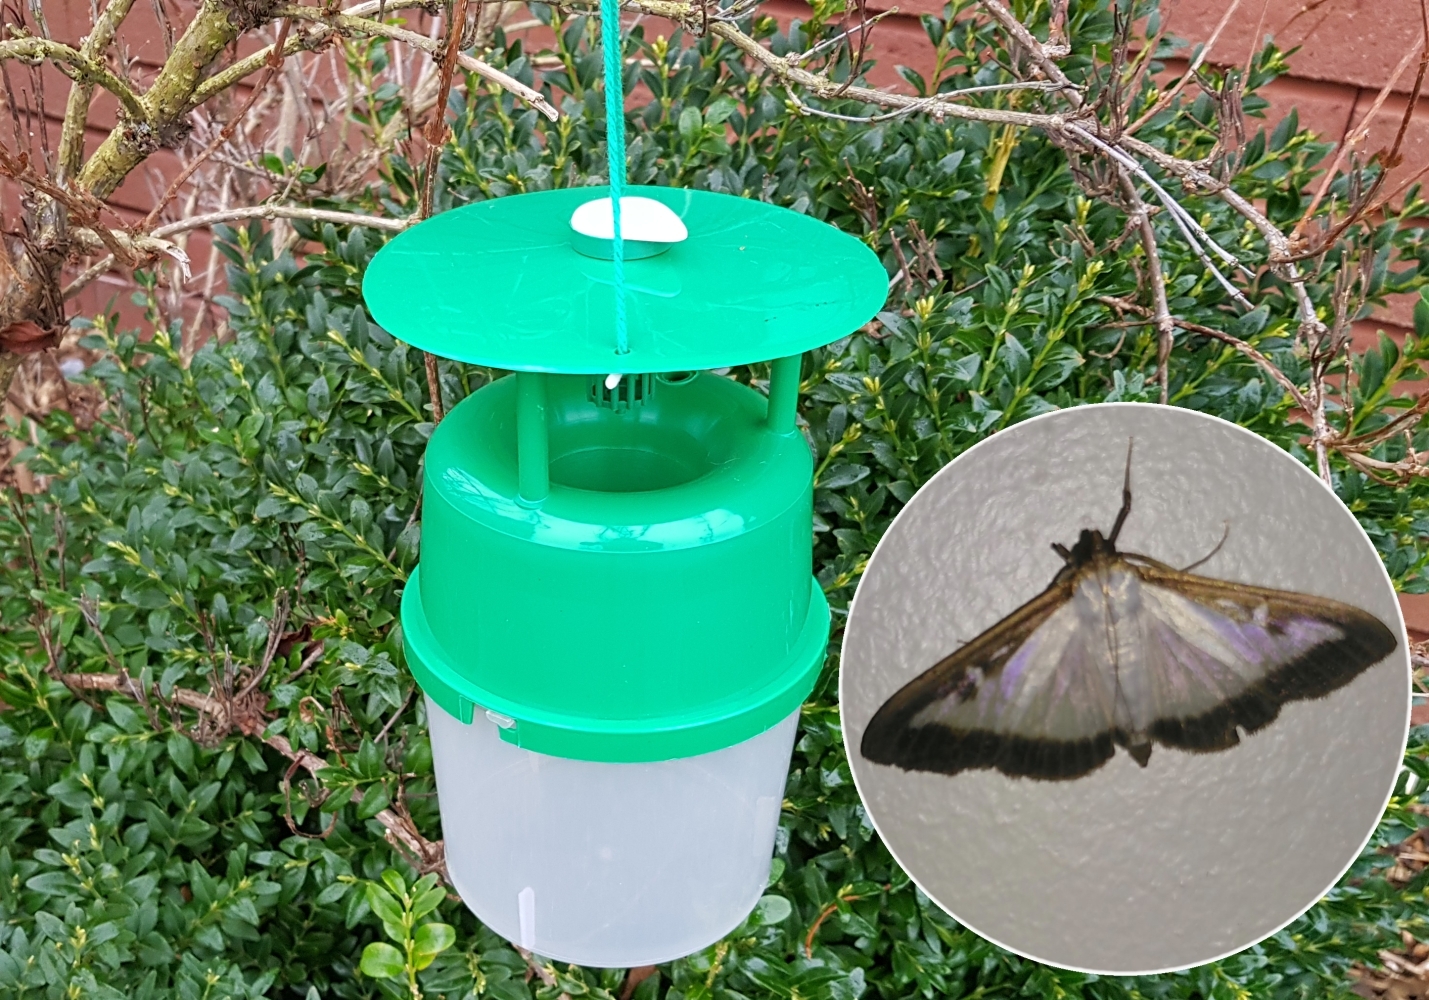 Box Moth Trap including Lure